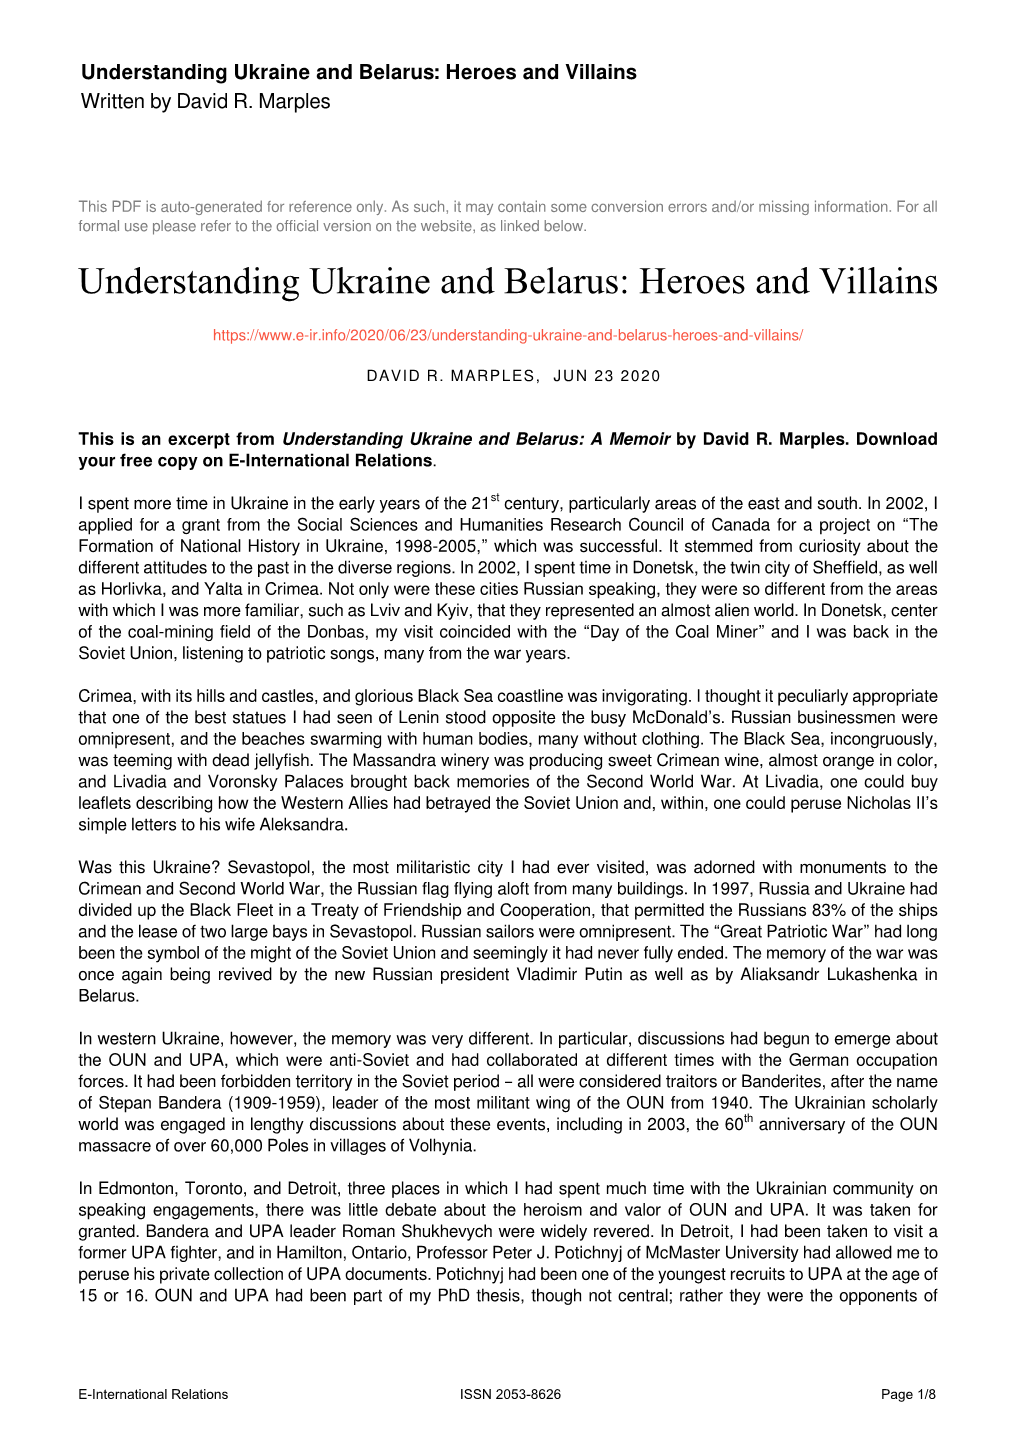 Understanding Ukraine and Belarus: Heroes and Villains Written by David R